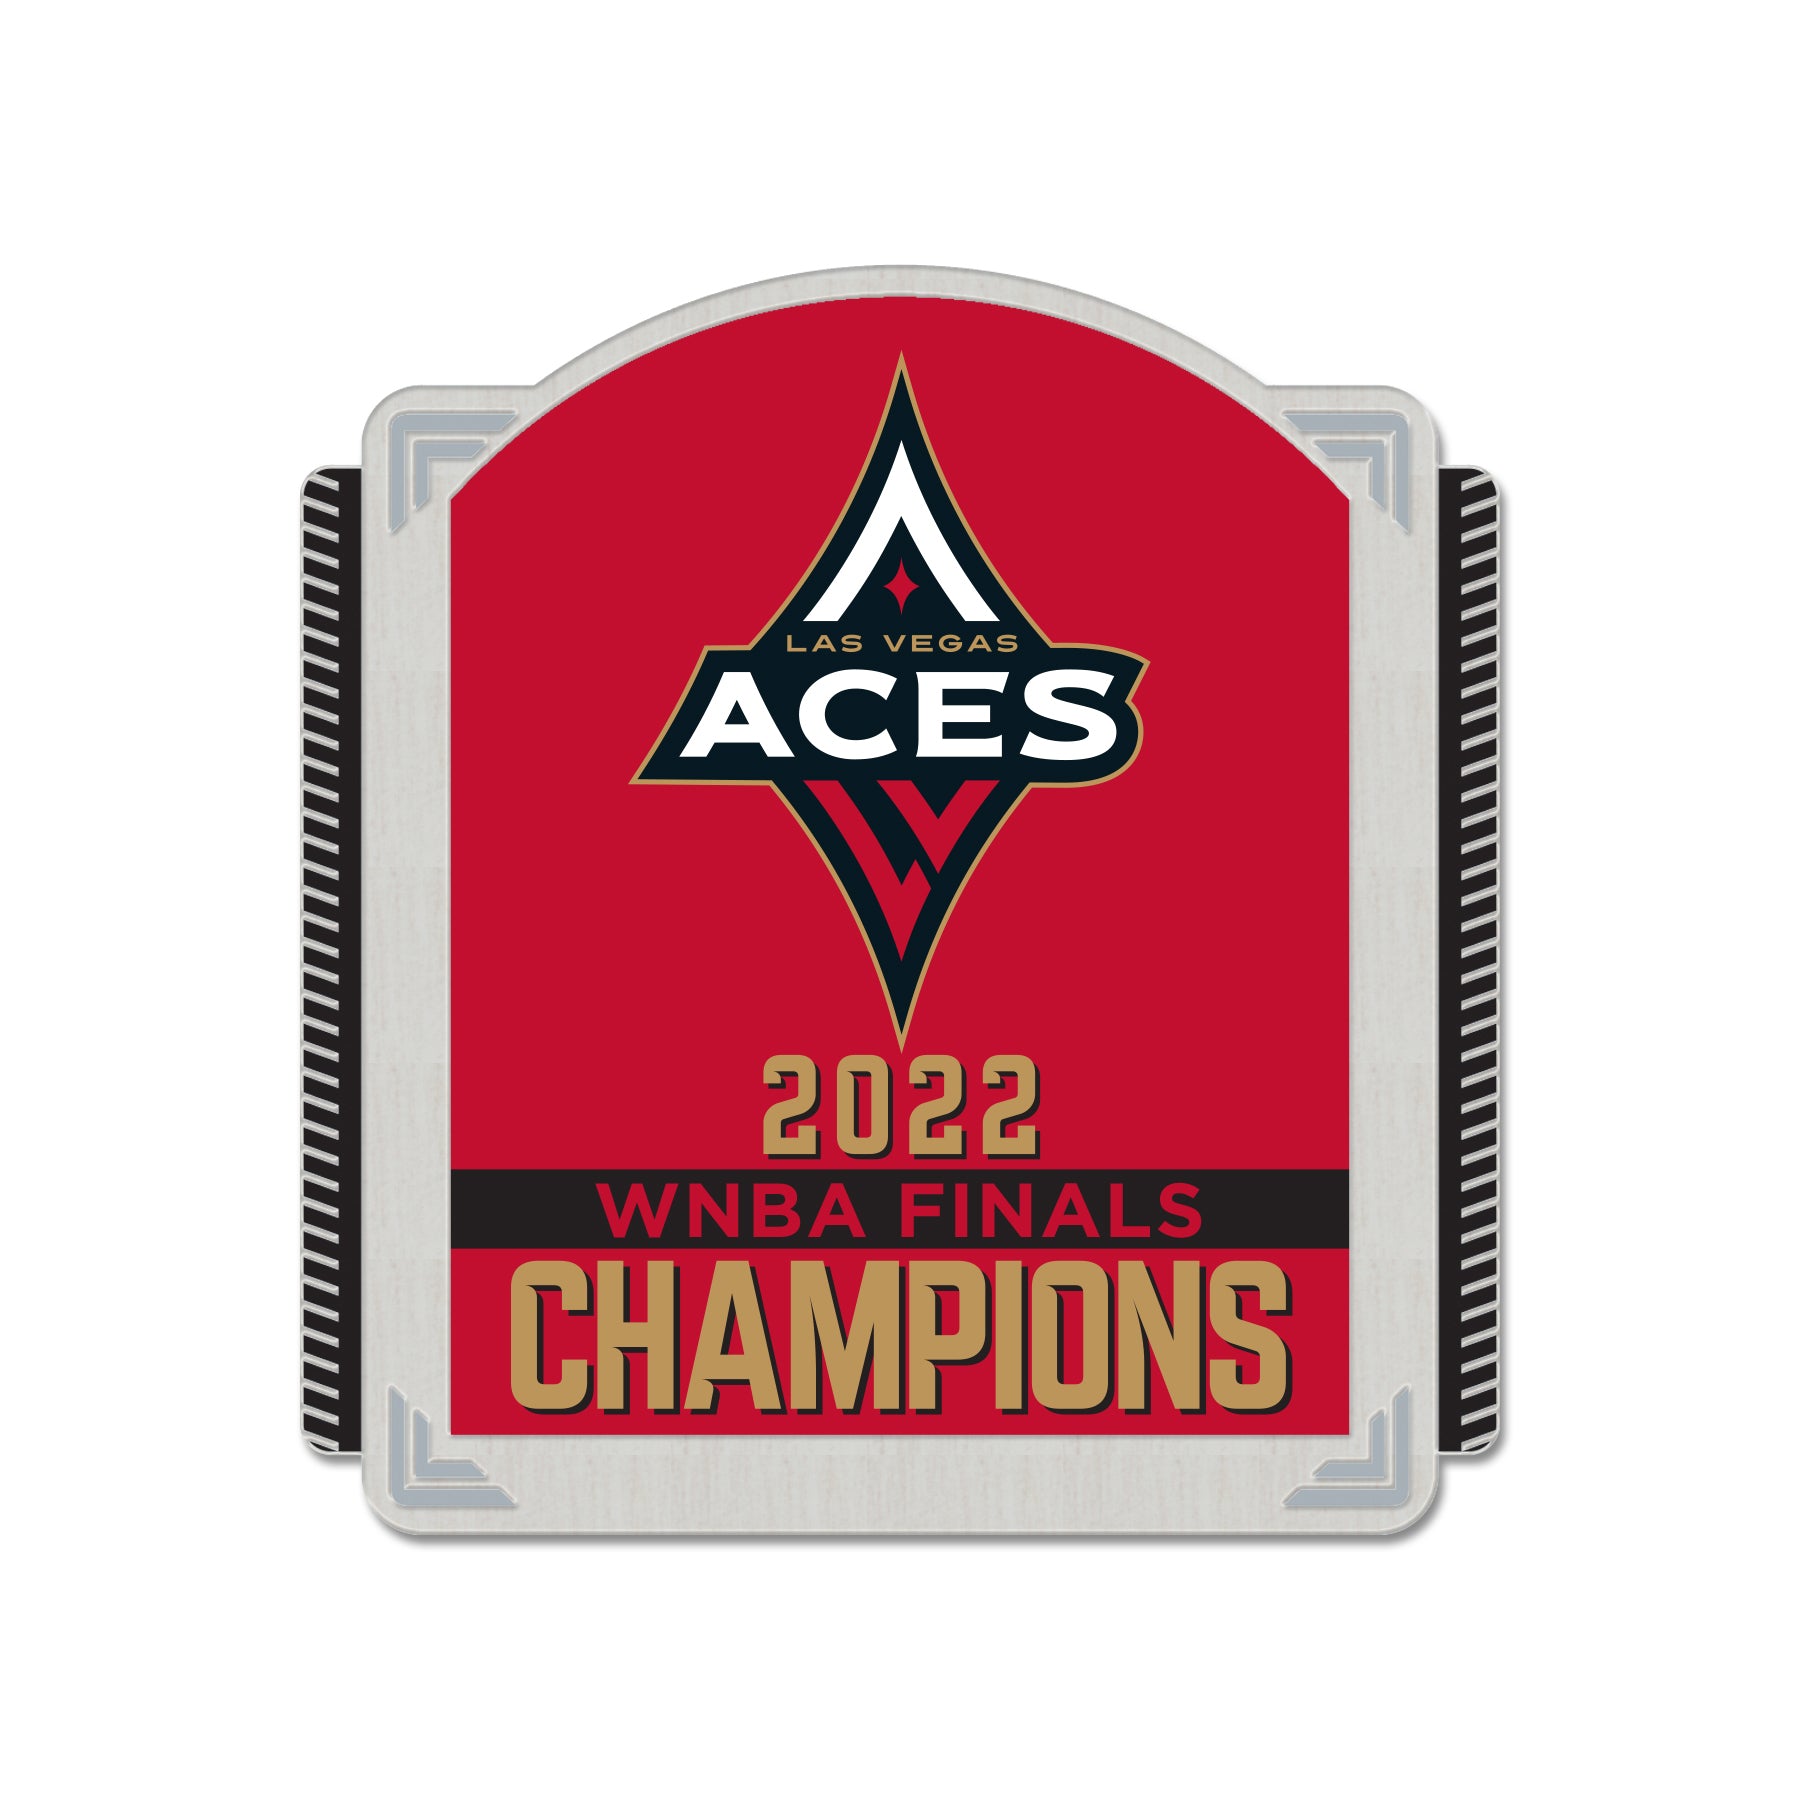 Las Vegas Aces Championship Pin